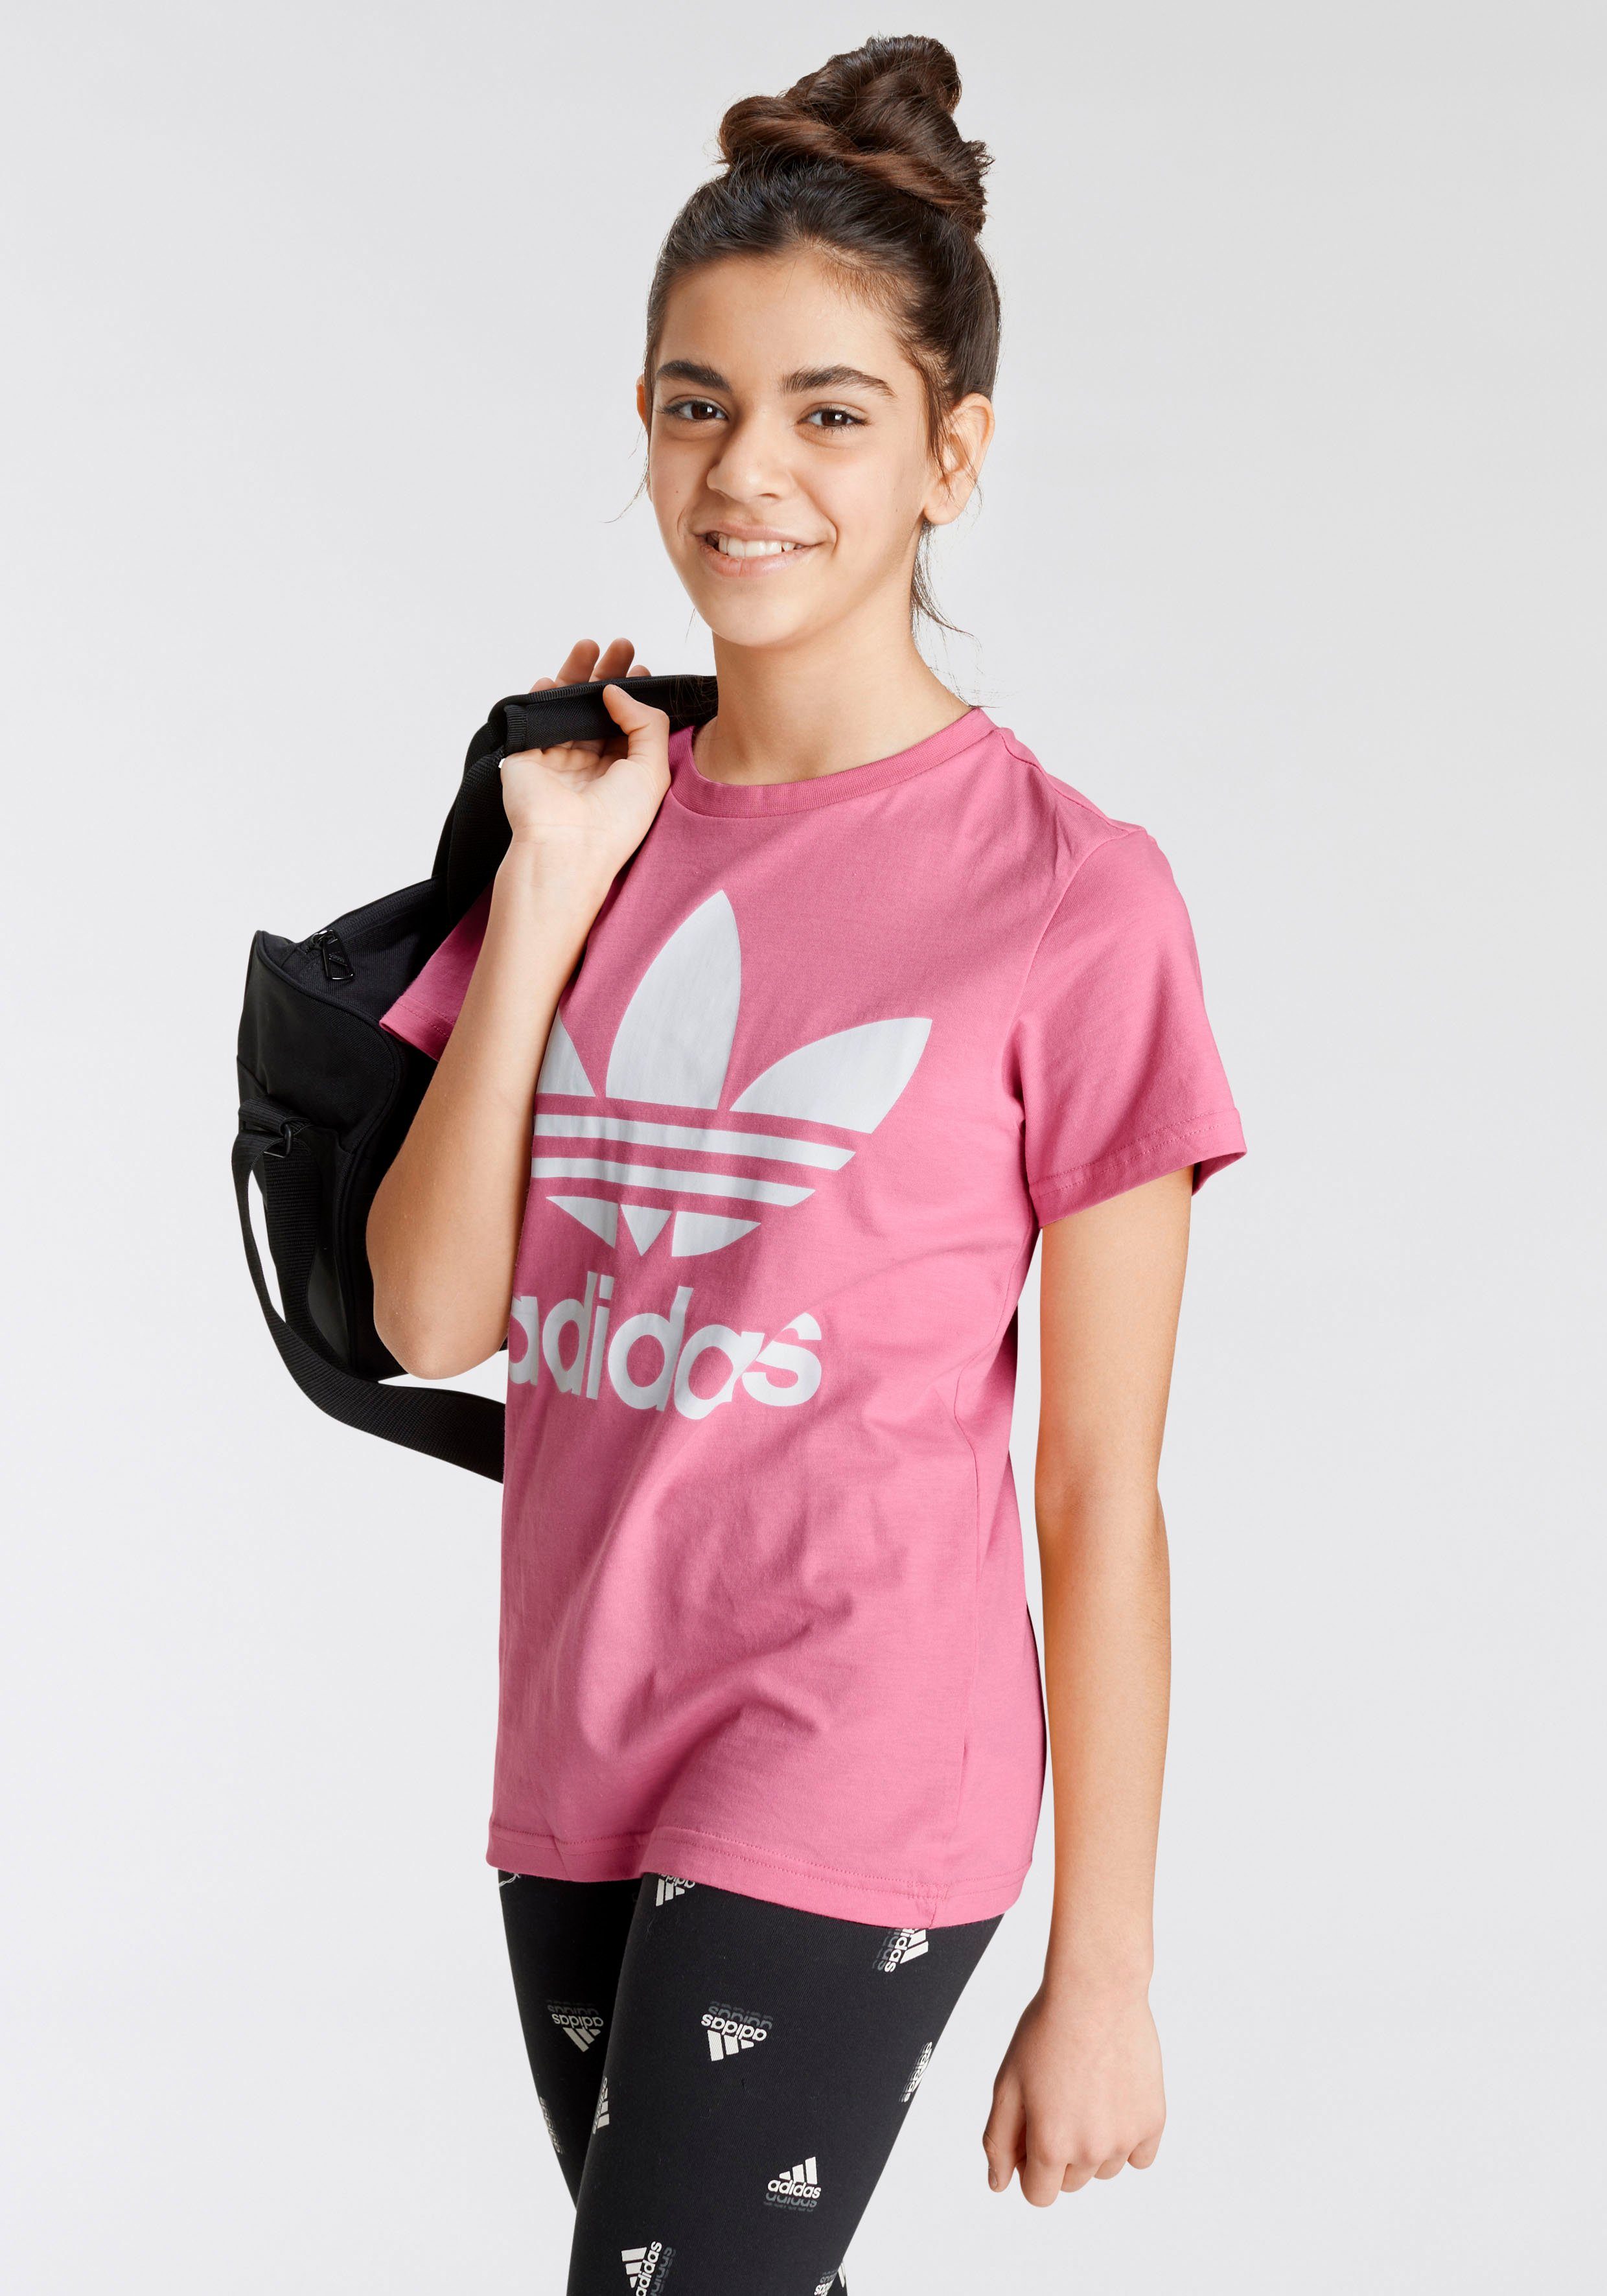 adidas Originals T-Shirt Unisex / TEE Pink White Bliss TREFOIL